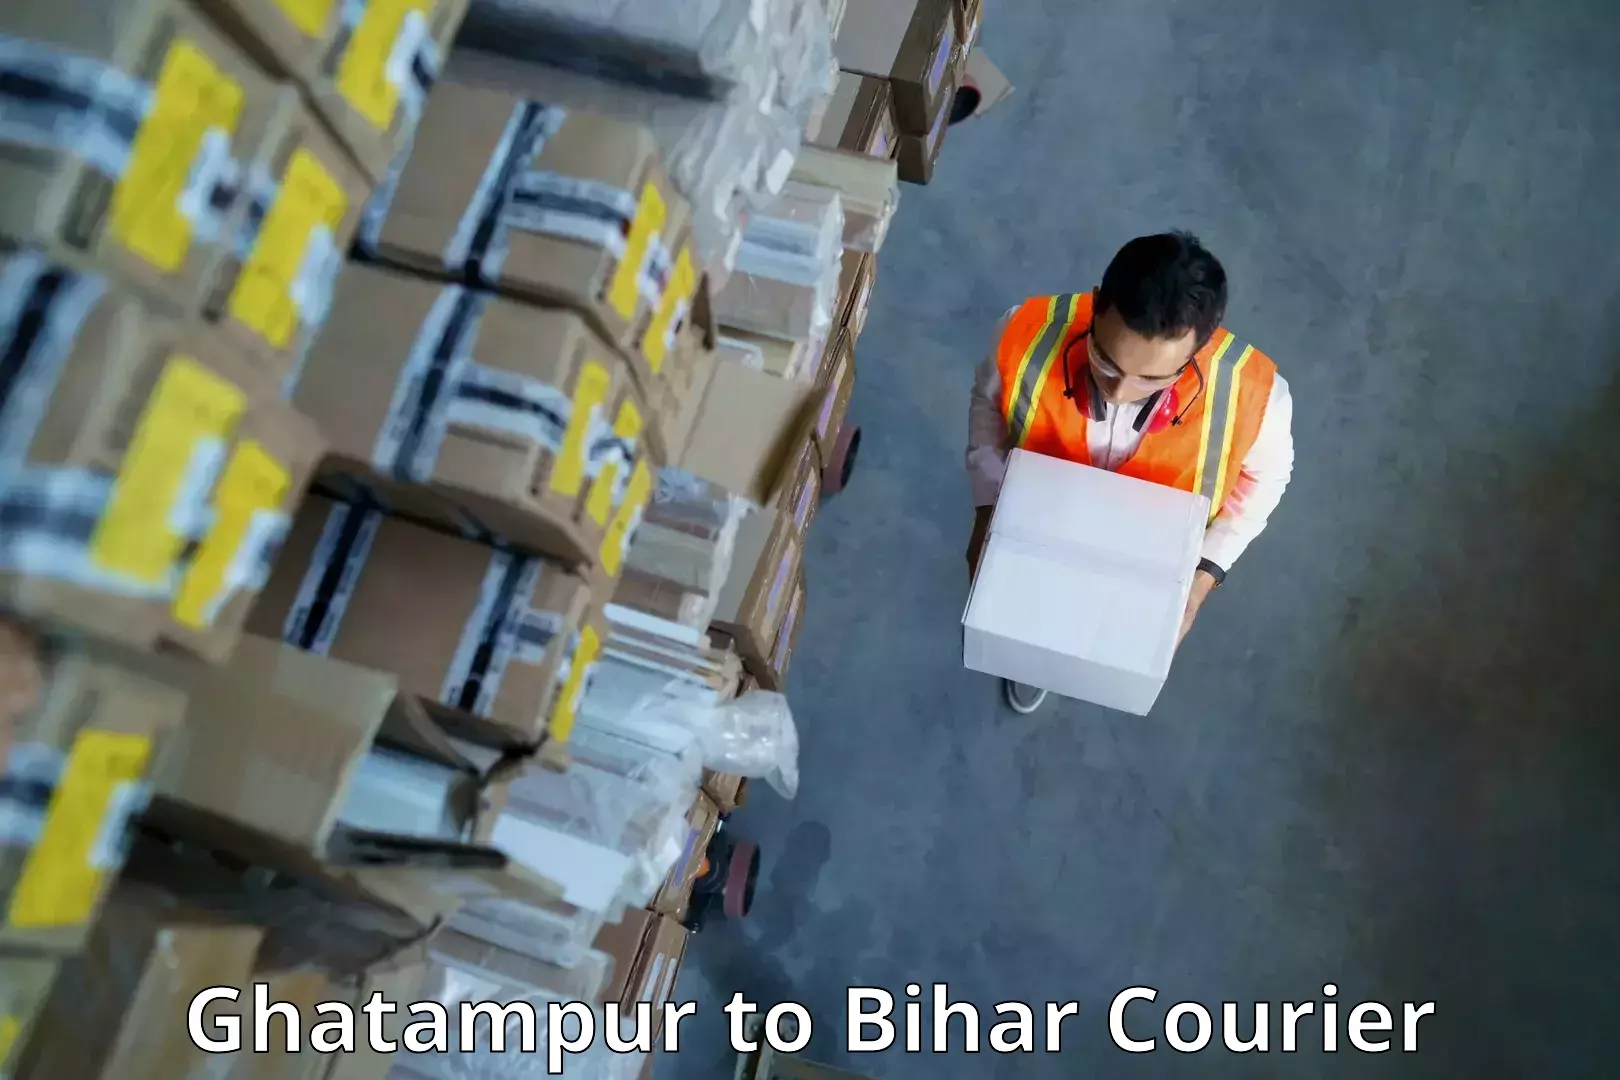 Courier service comparison Ghatampur to Mairwa